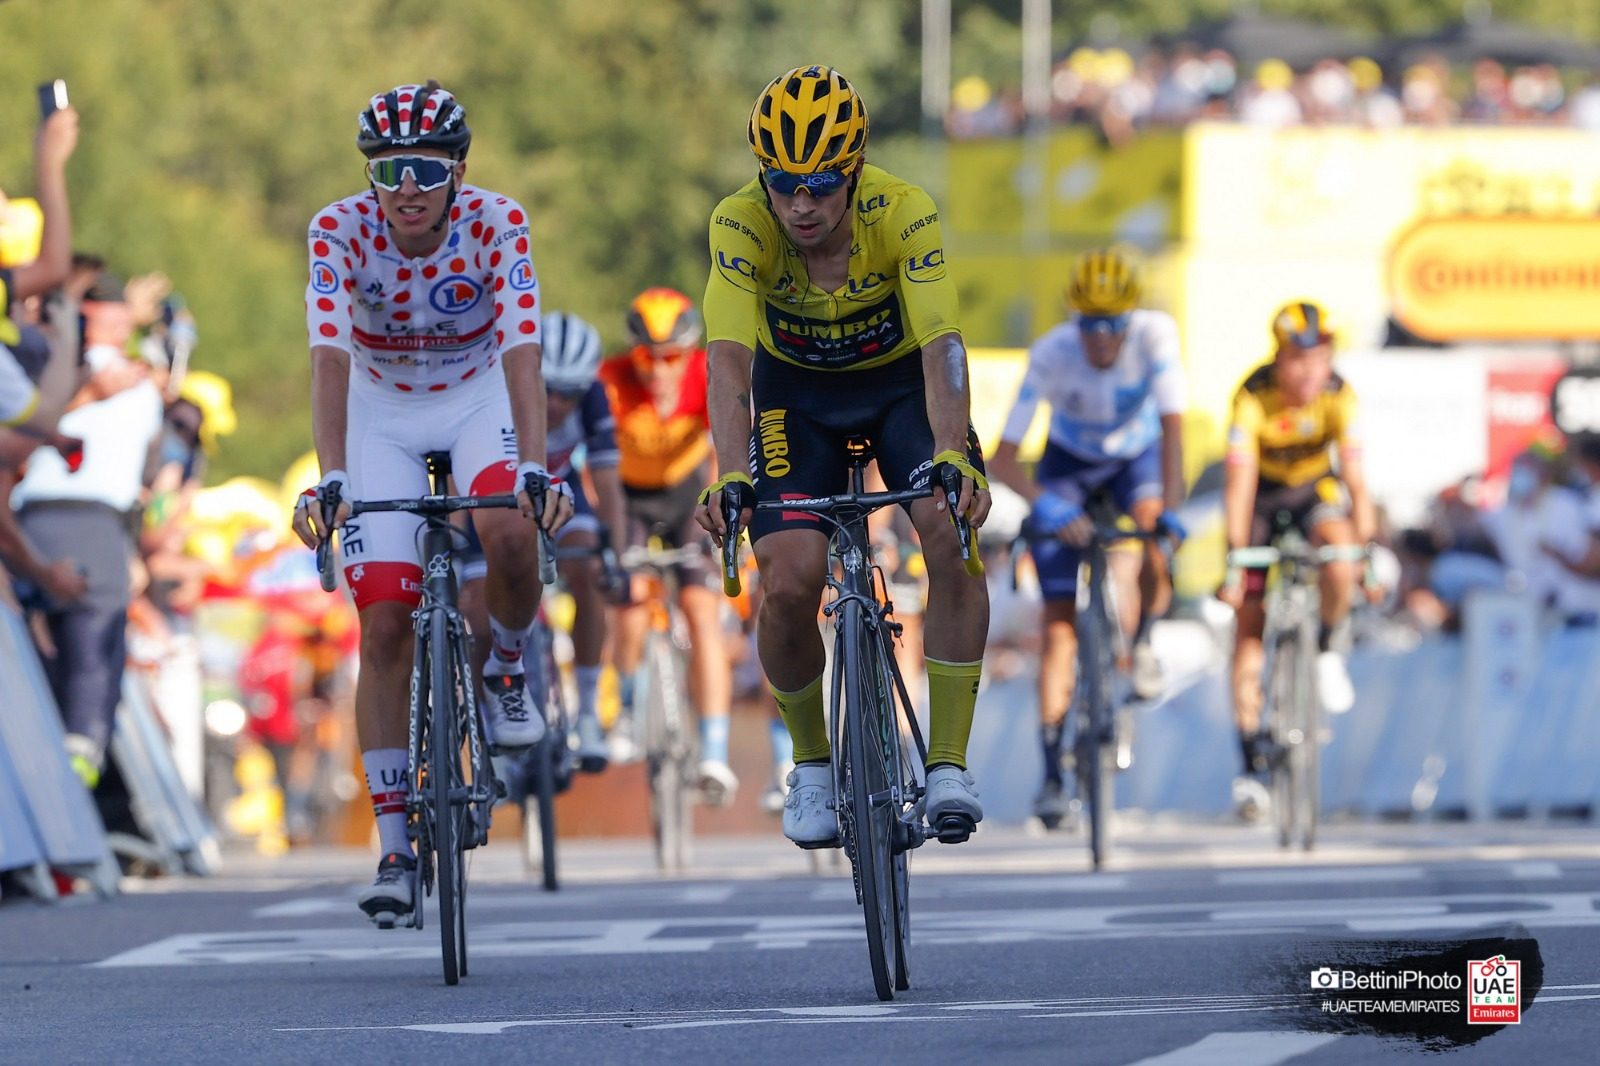 Klooster Periodiek Hol Tour de France: Pogačar fifth in La Roche-sur-Foron - UAE team Emirates